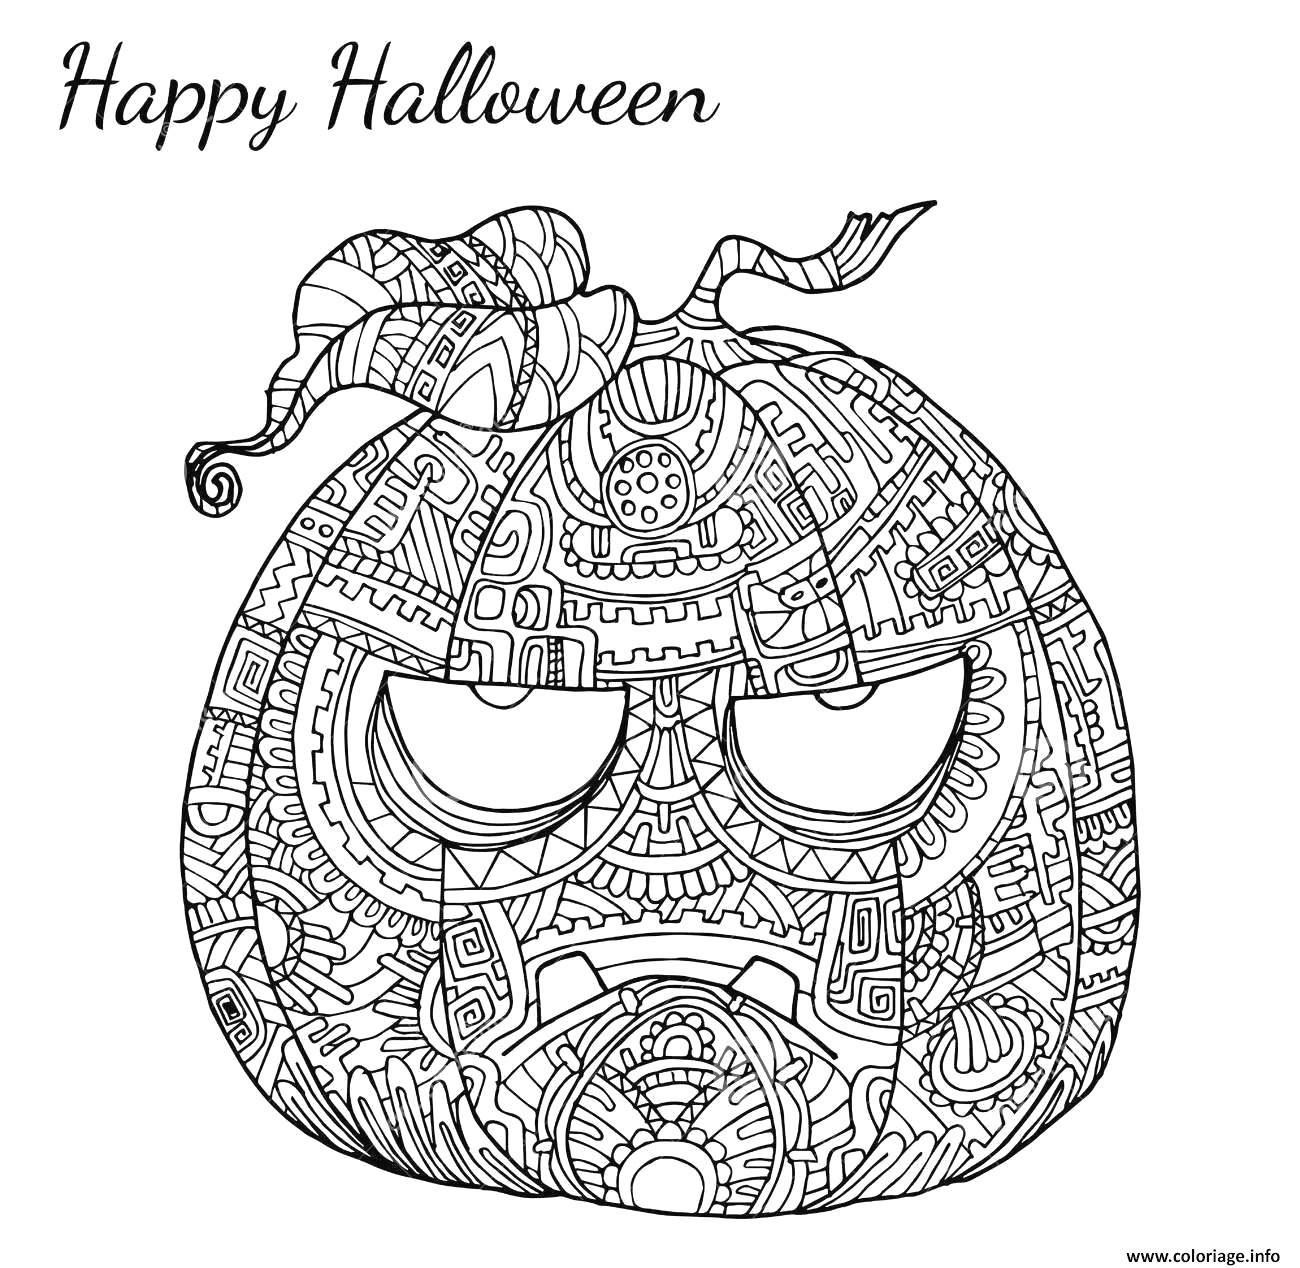 coloriage halloween adulte imprimer avec adulte tatouage calavera et dessin halloween qui fait peur 14 2416x1736px dessin halloween qui fait peur